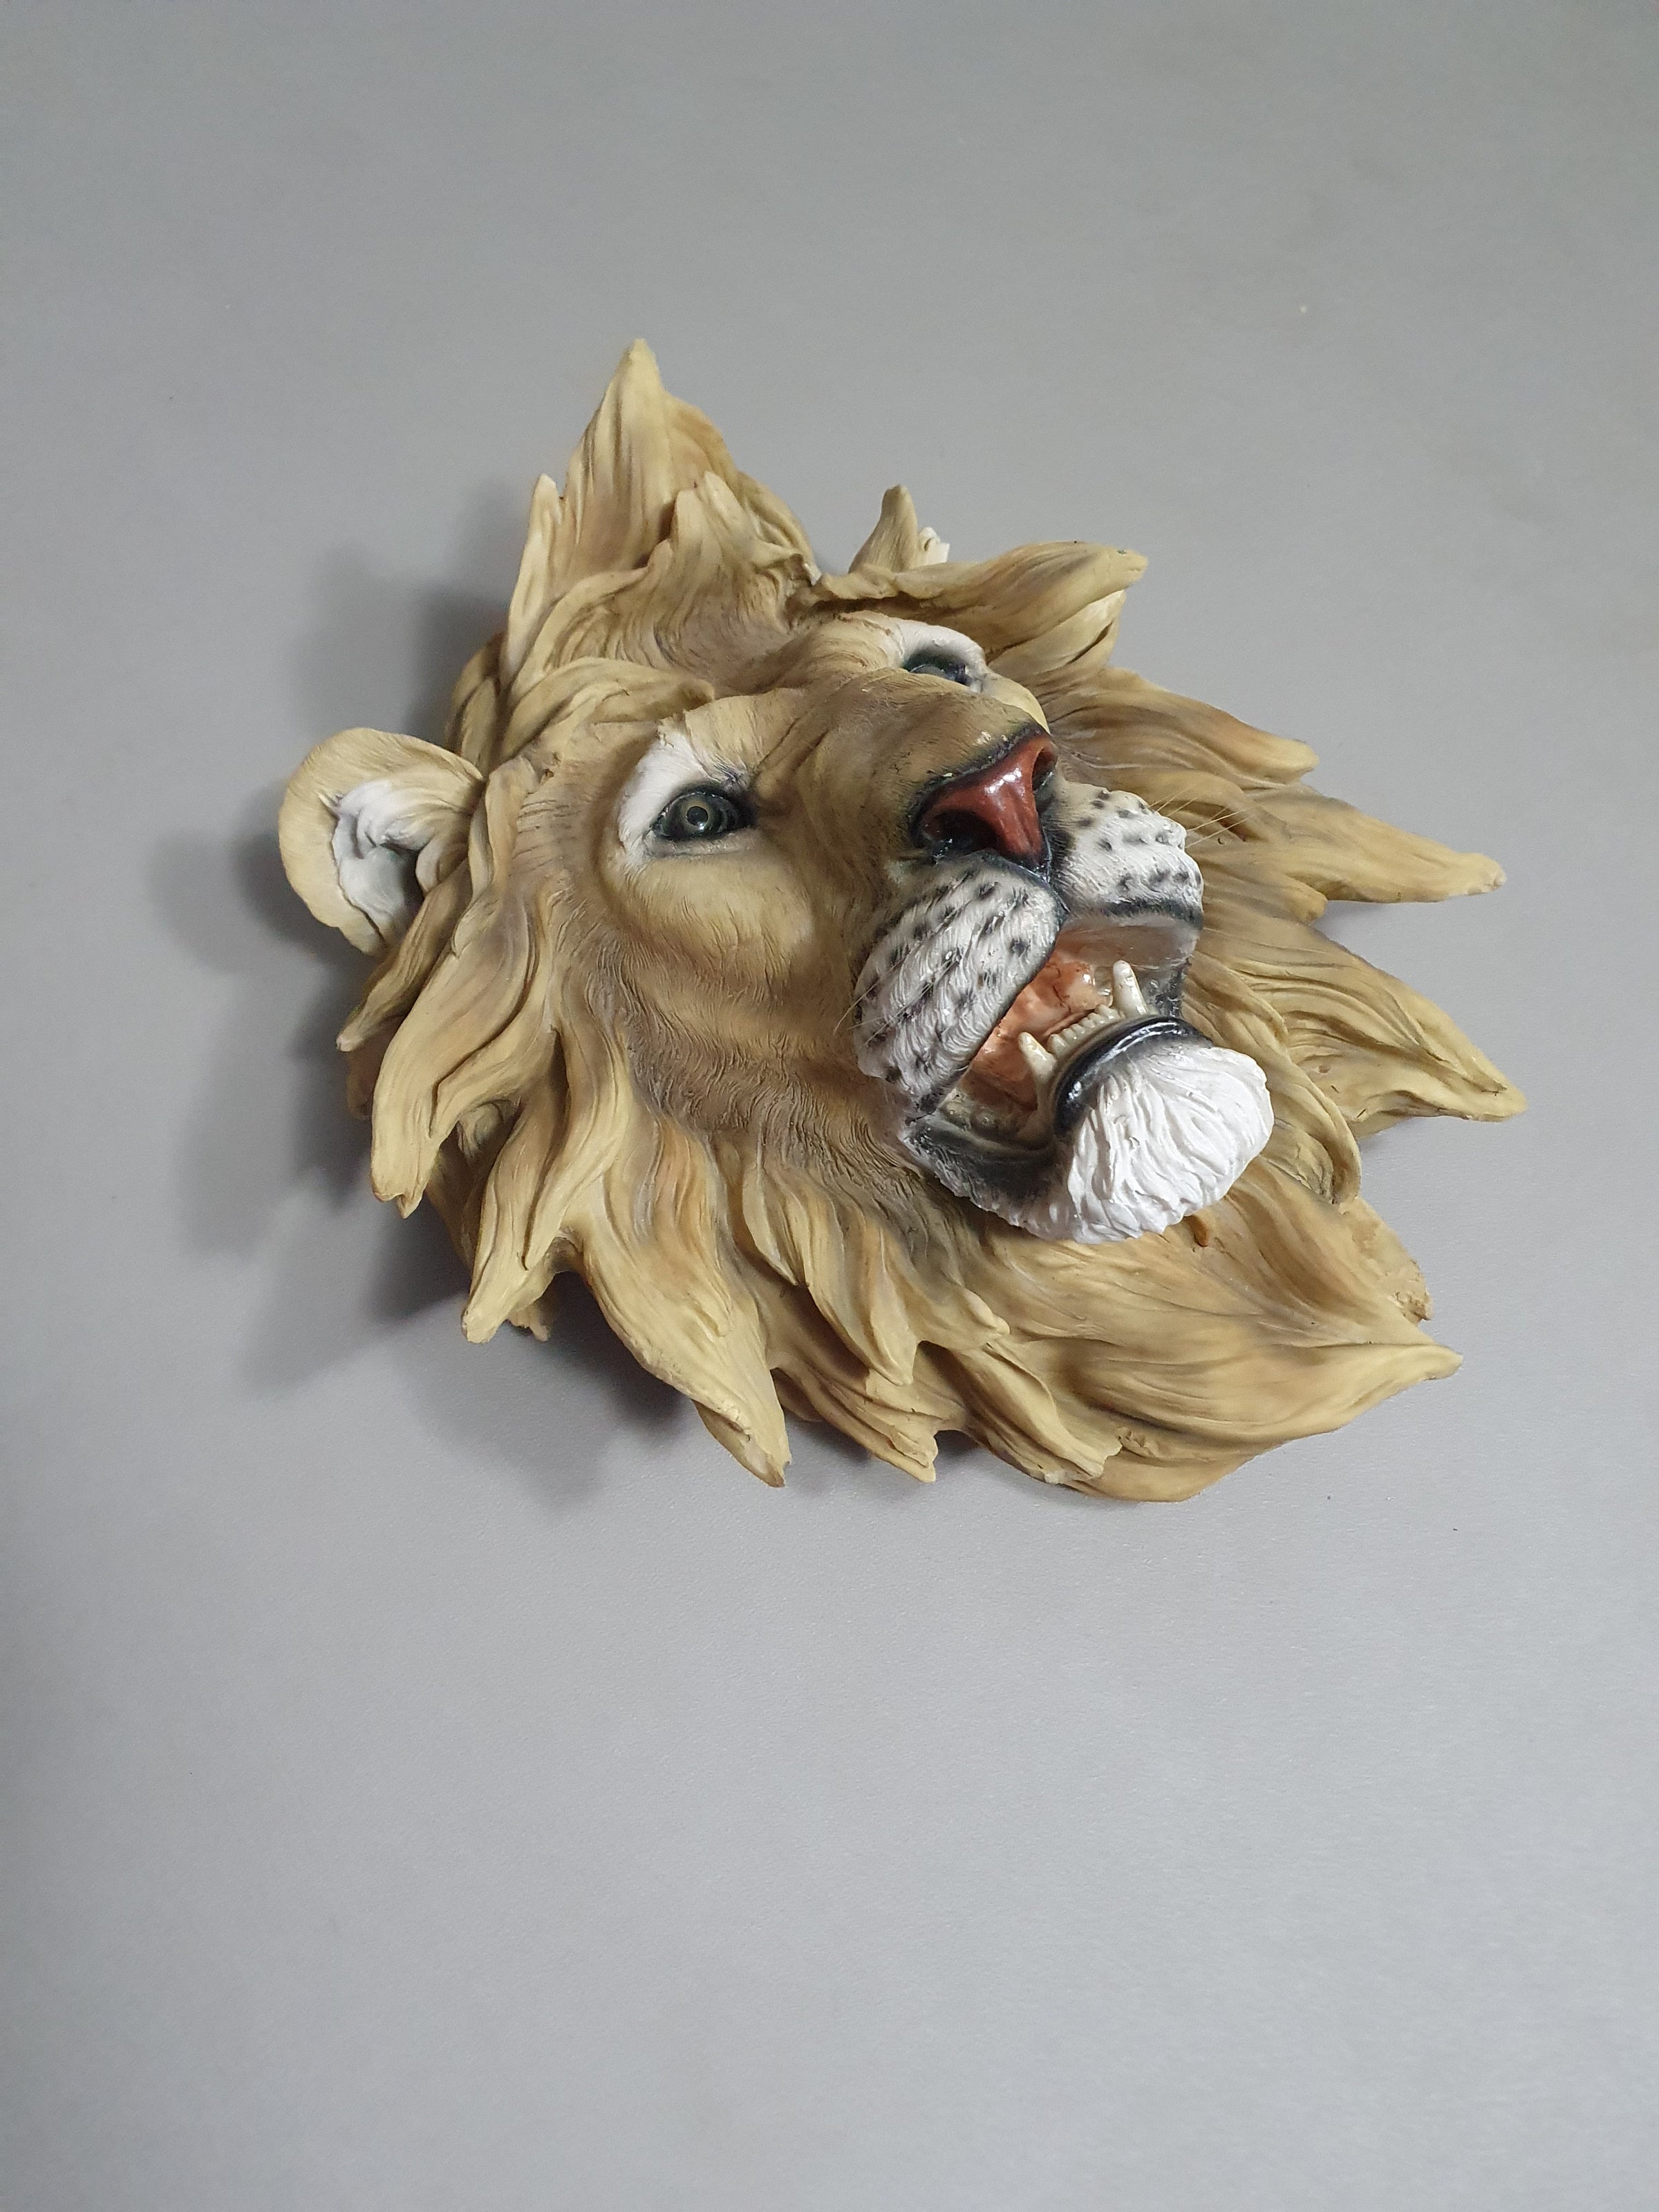 Resin / epoxy wall lion head 55 x 55 x 30 cm depth